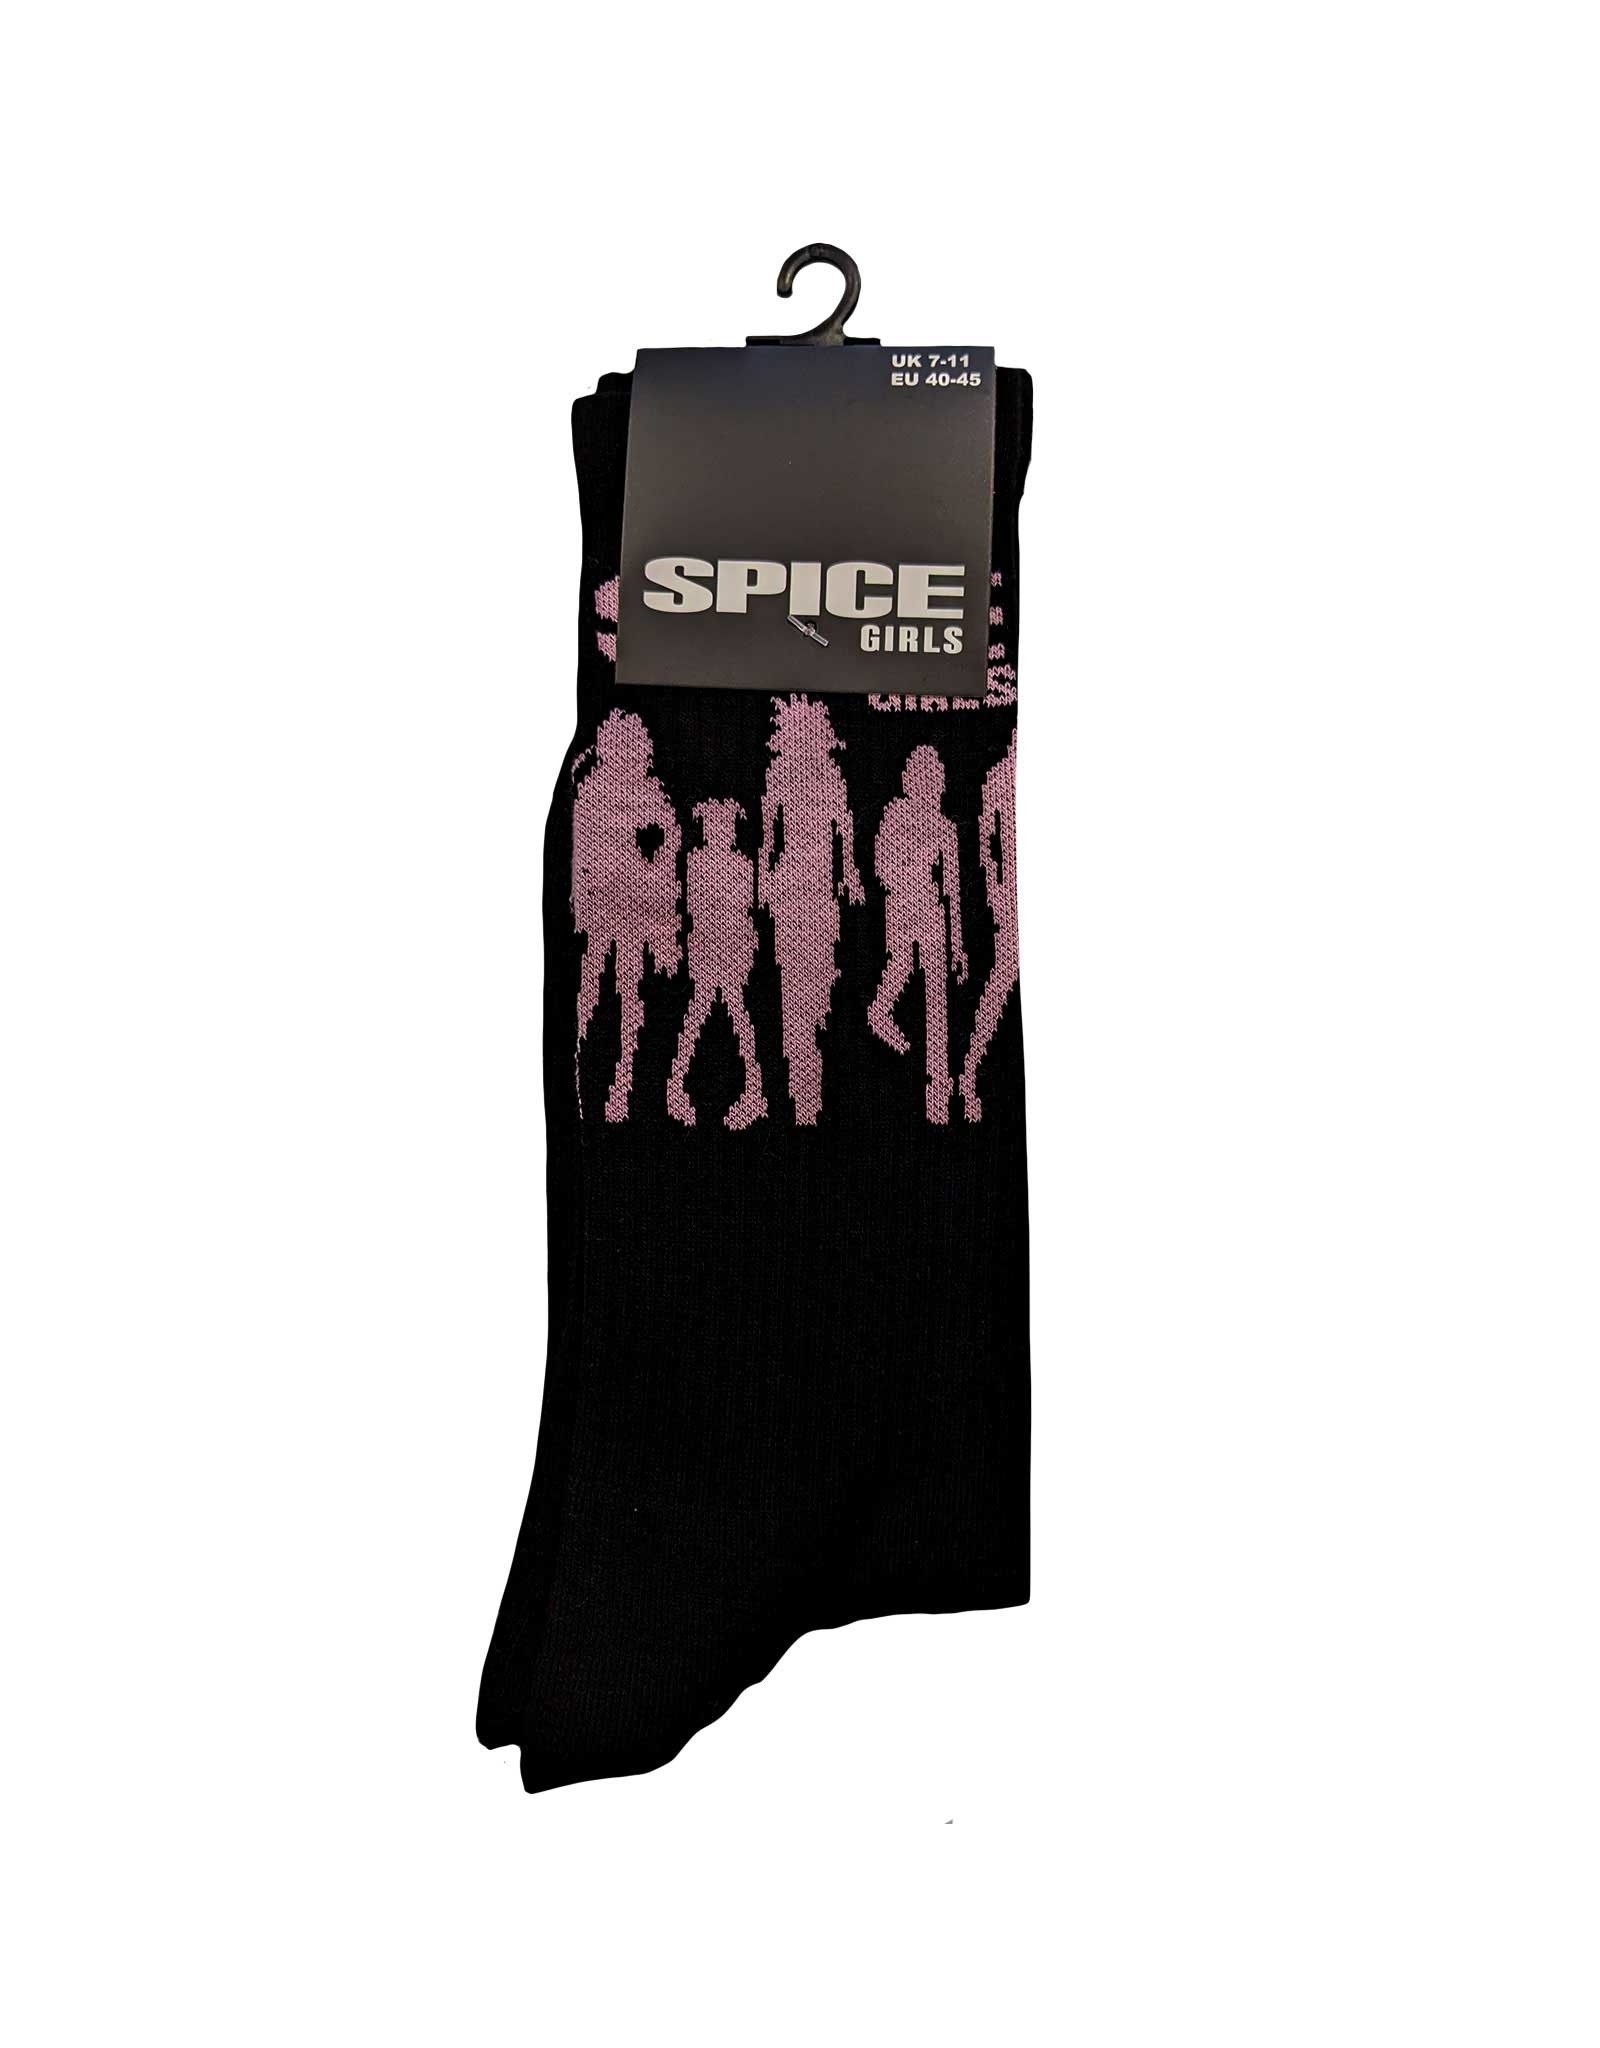 Spice Girls / Silhouette Socks